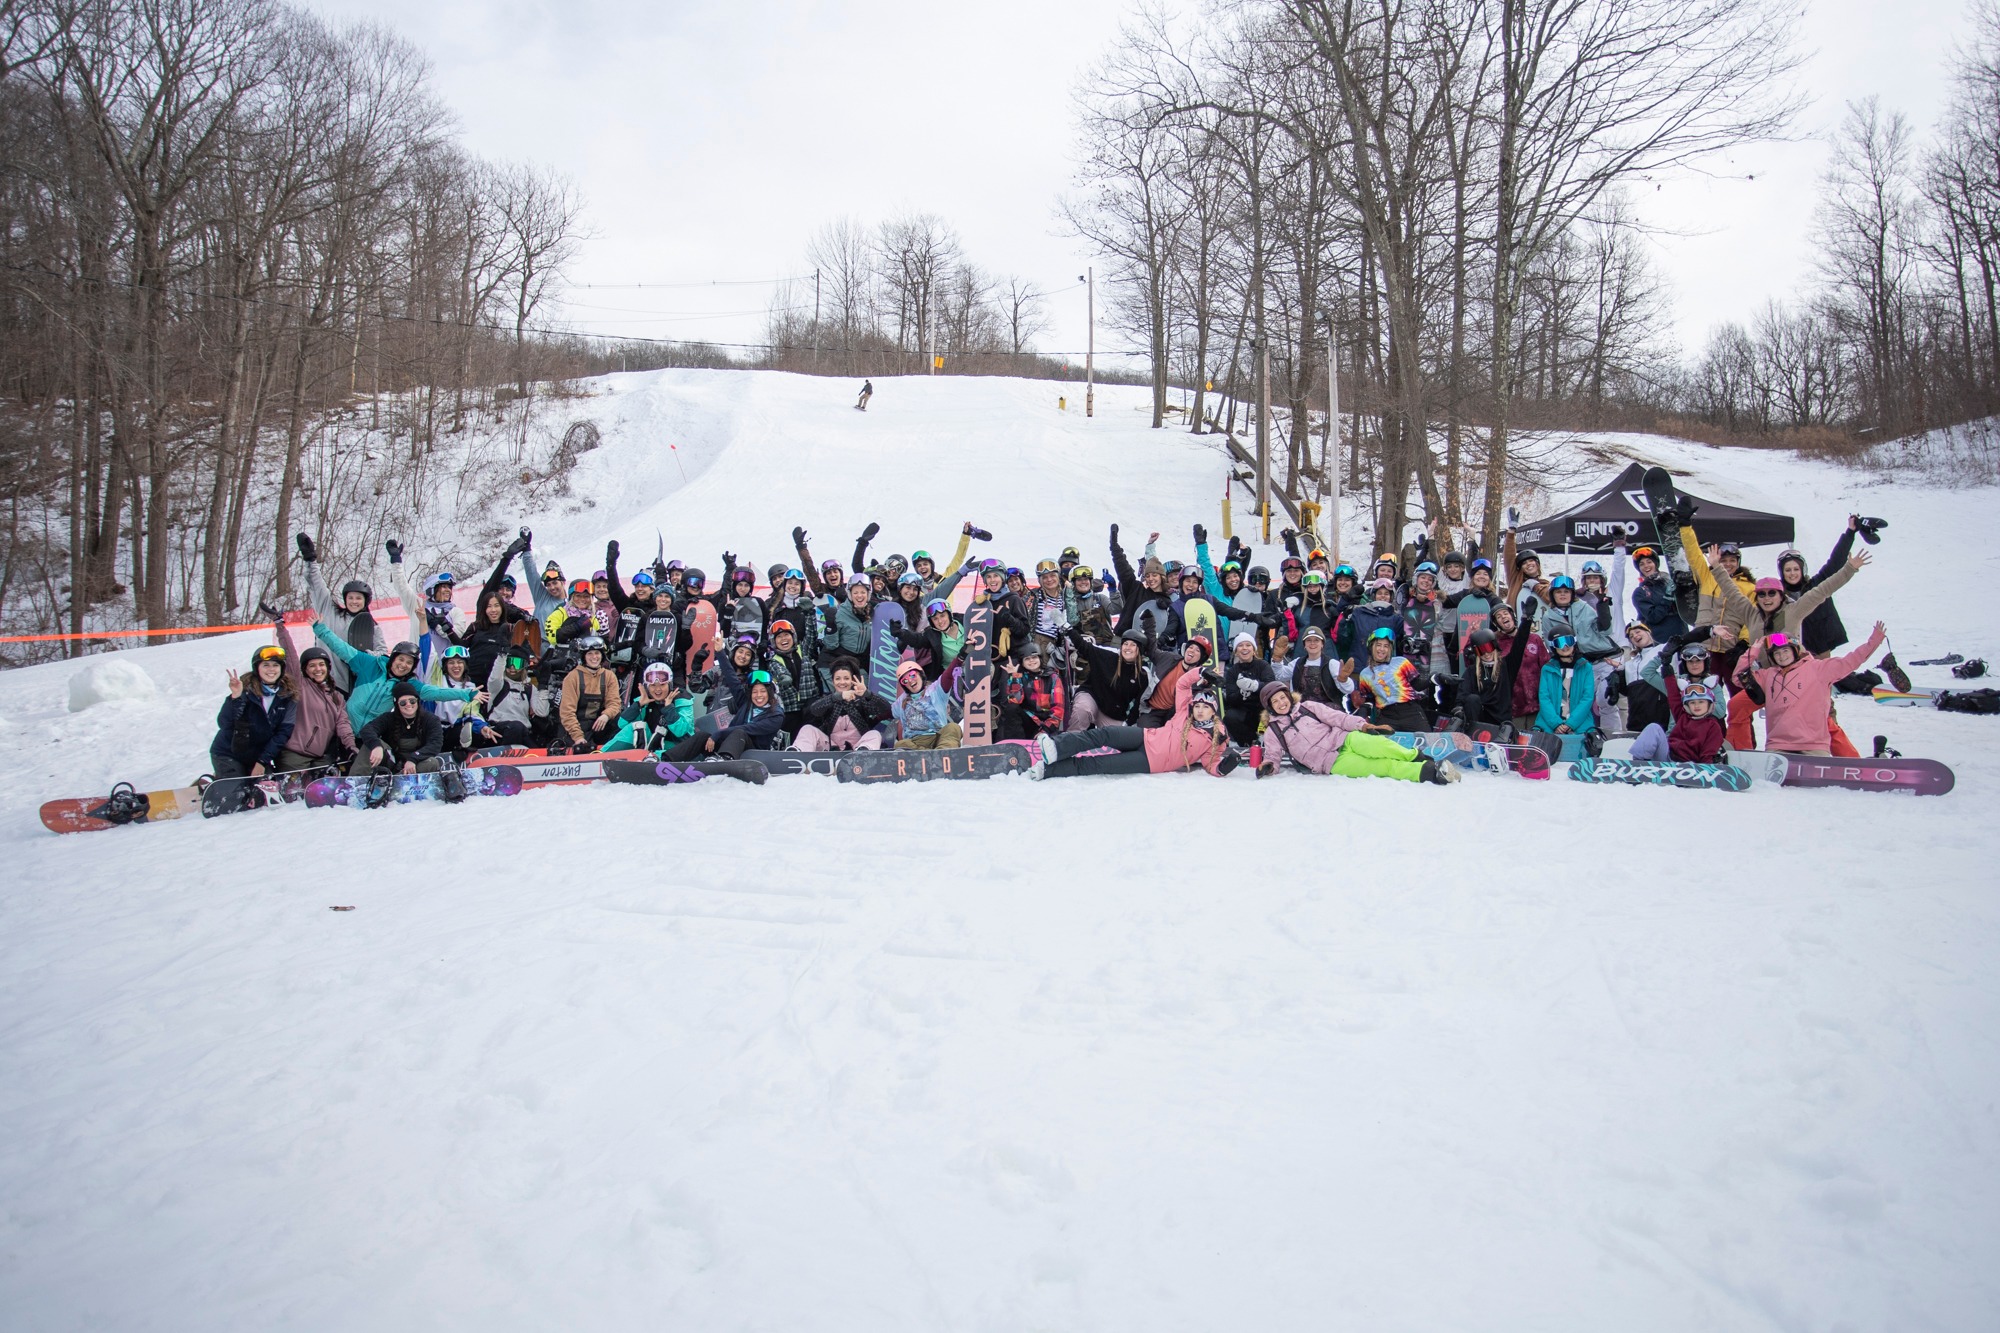 BTBounds Women's Snowboard Camp at Mountain Creek